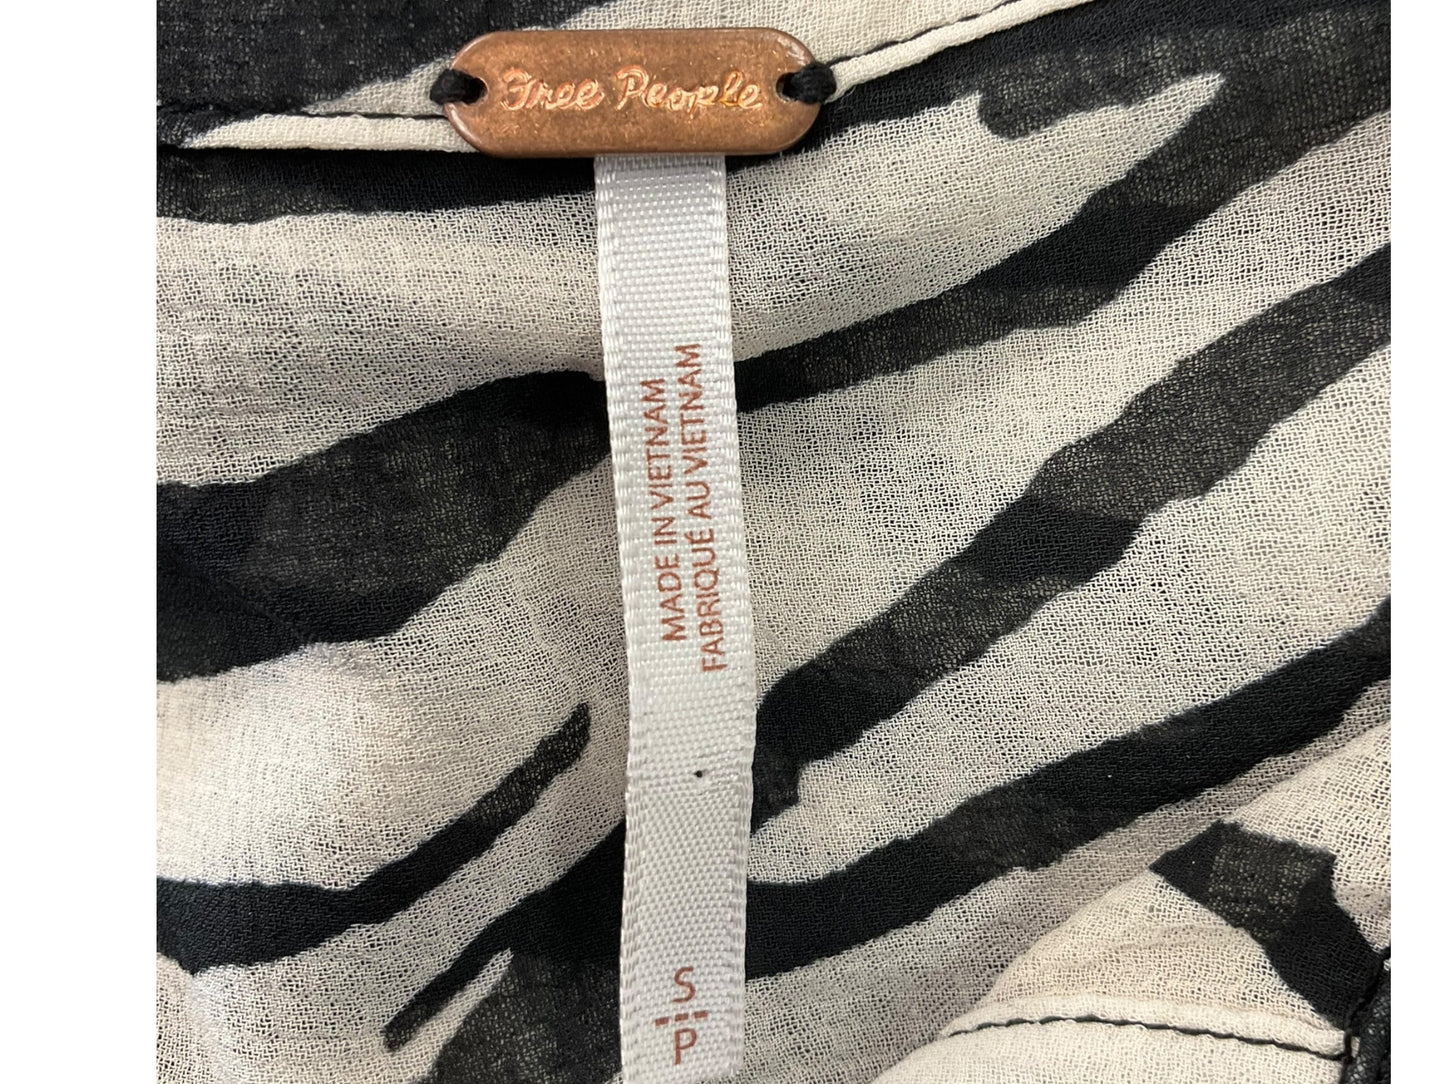 Zebra Print Blouse Long Sleeve Free People, Size S